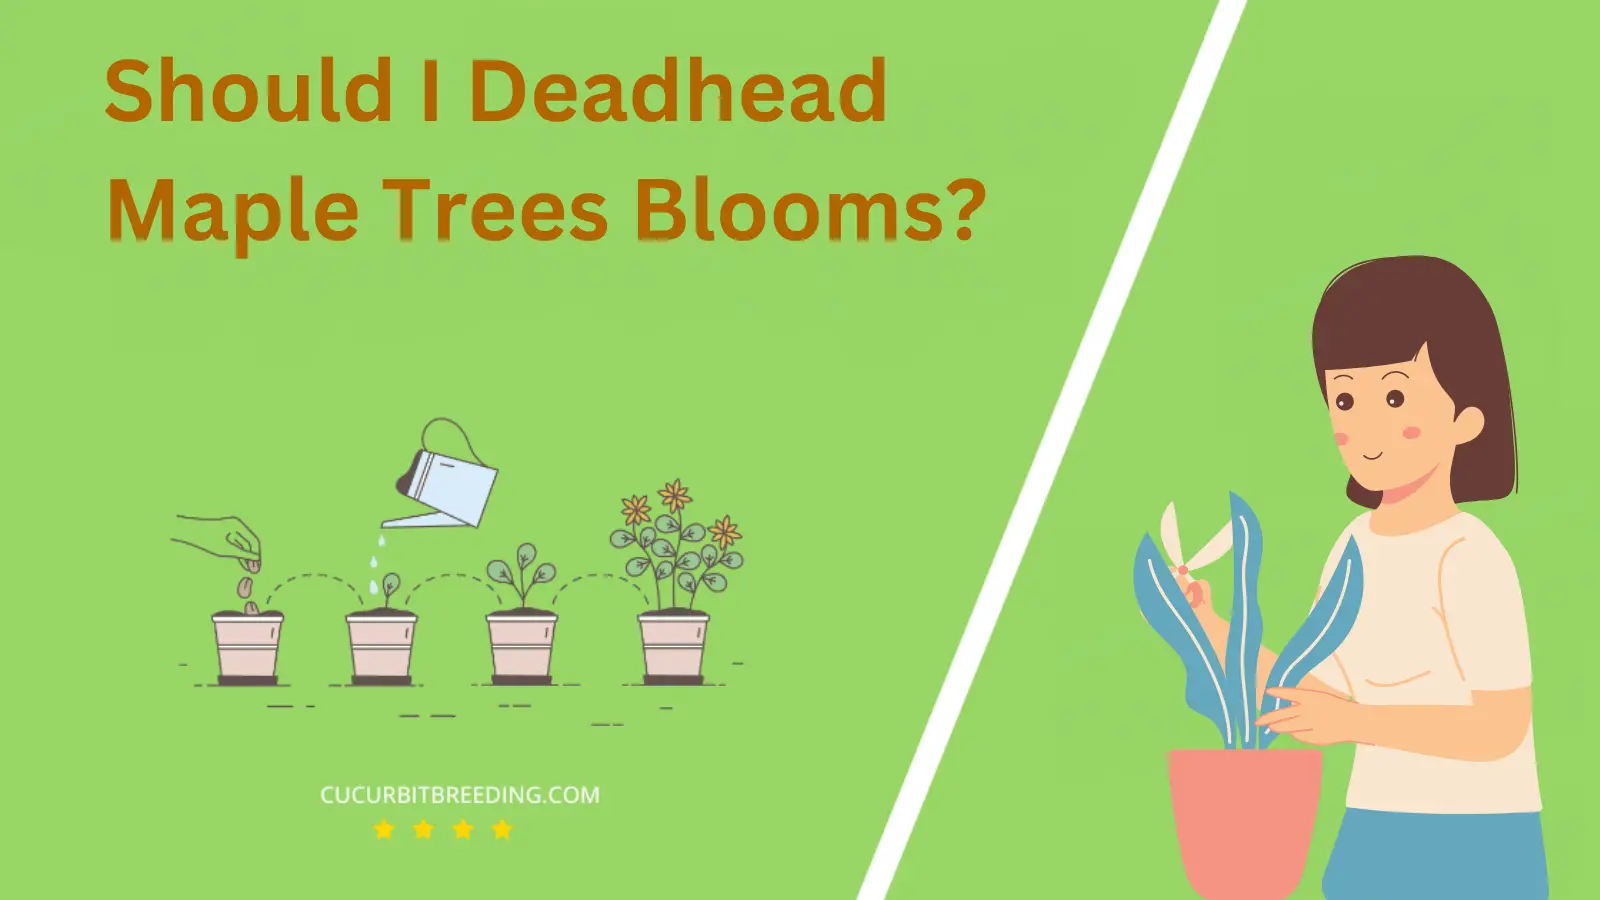 Should I Deadhead Maple Trees Blooms?